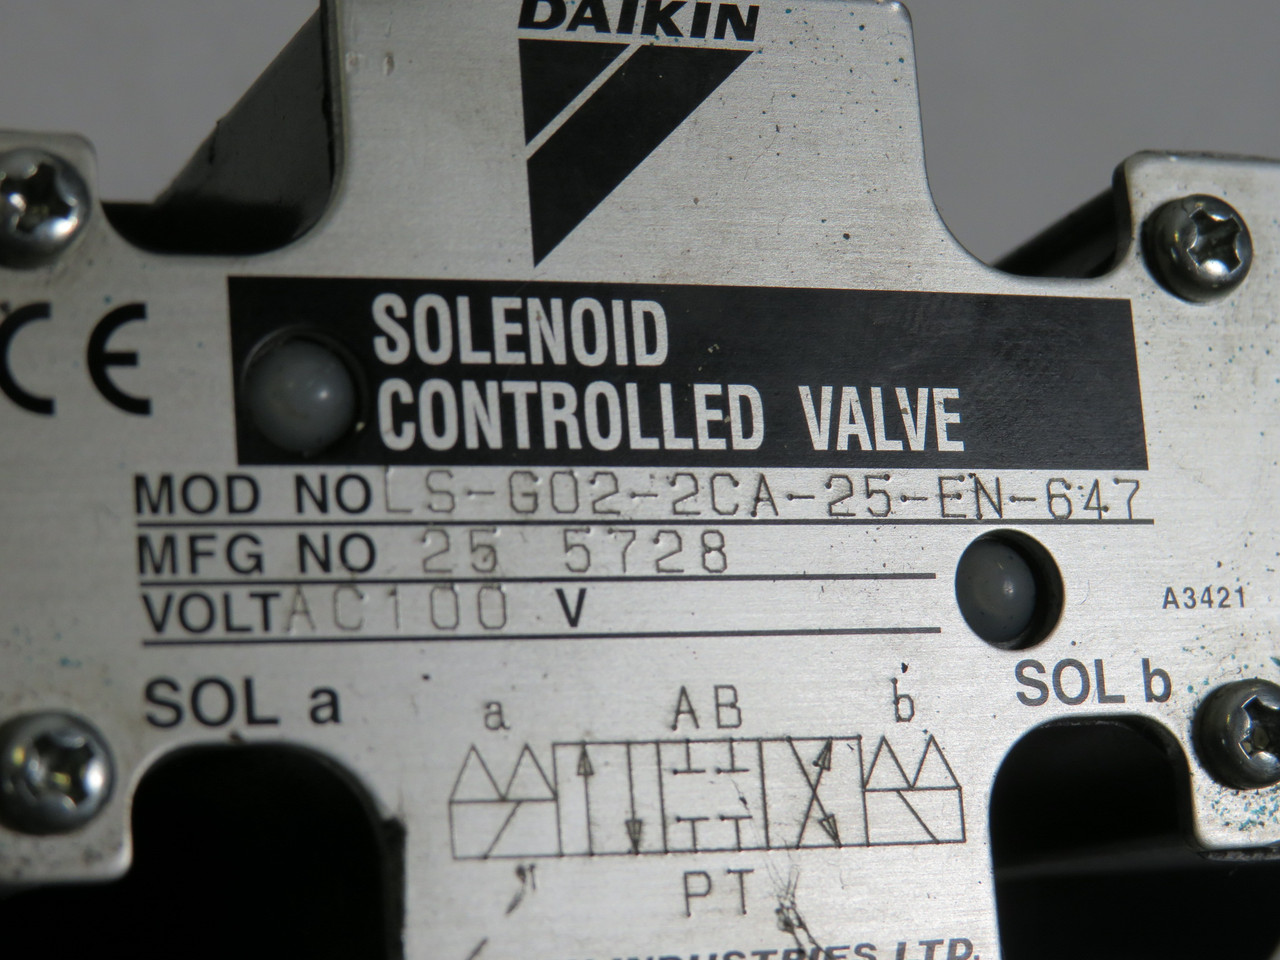 Daikin LS-G02-2CA-25-EN-647 Solenoid Controlled Valve AC100V USED